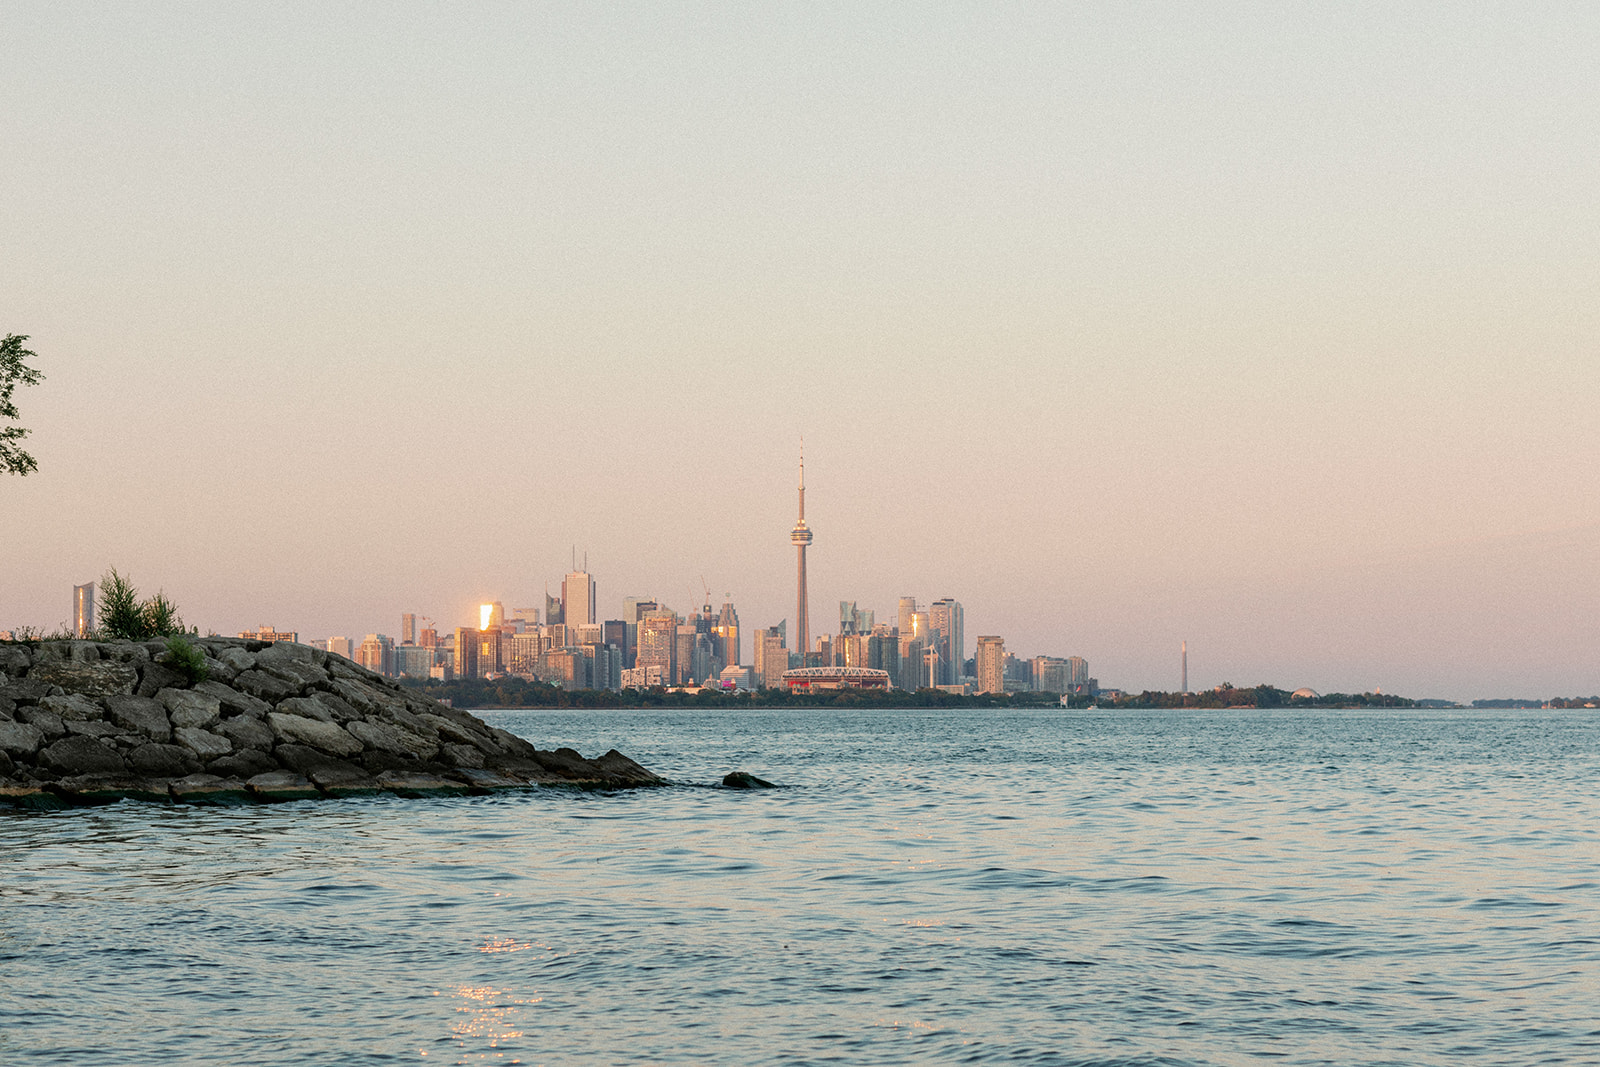 Toronto Skyline at Sunset shot from the Toronto Islands